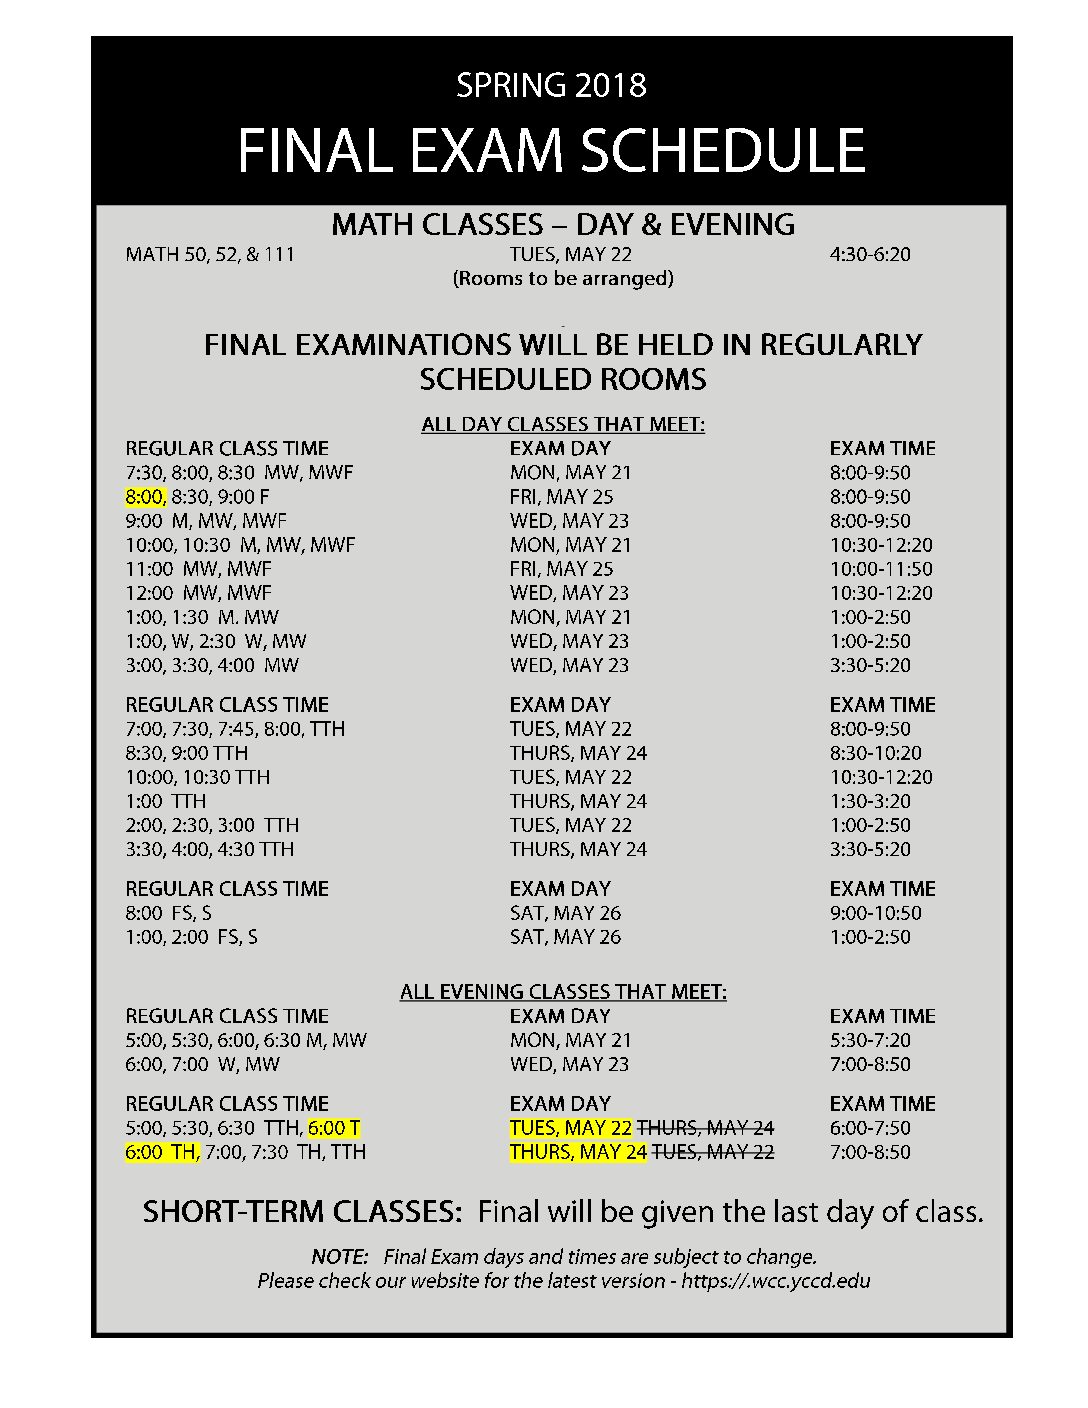 Final Exam Schedule - SP18rev - Woodland Community College